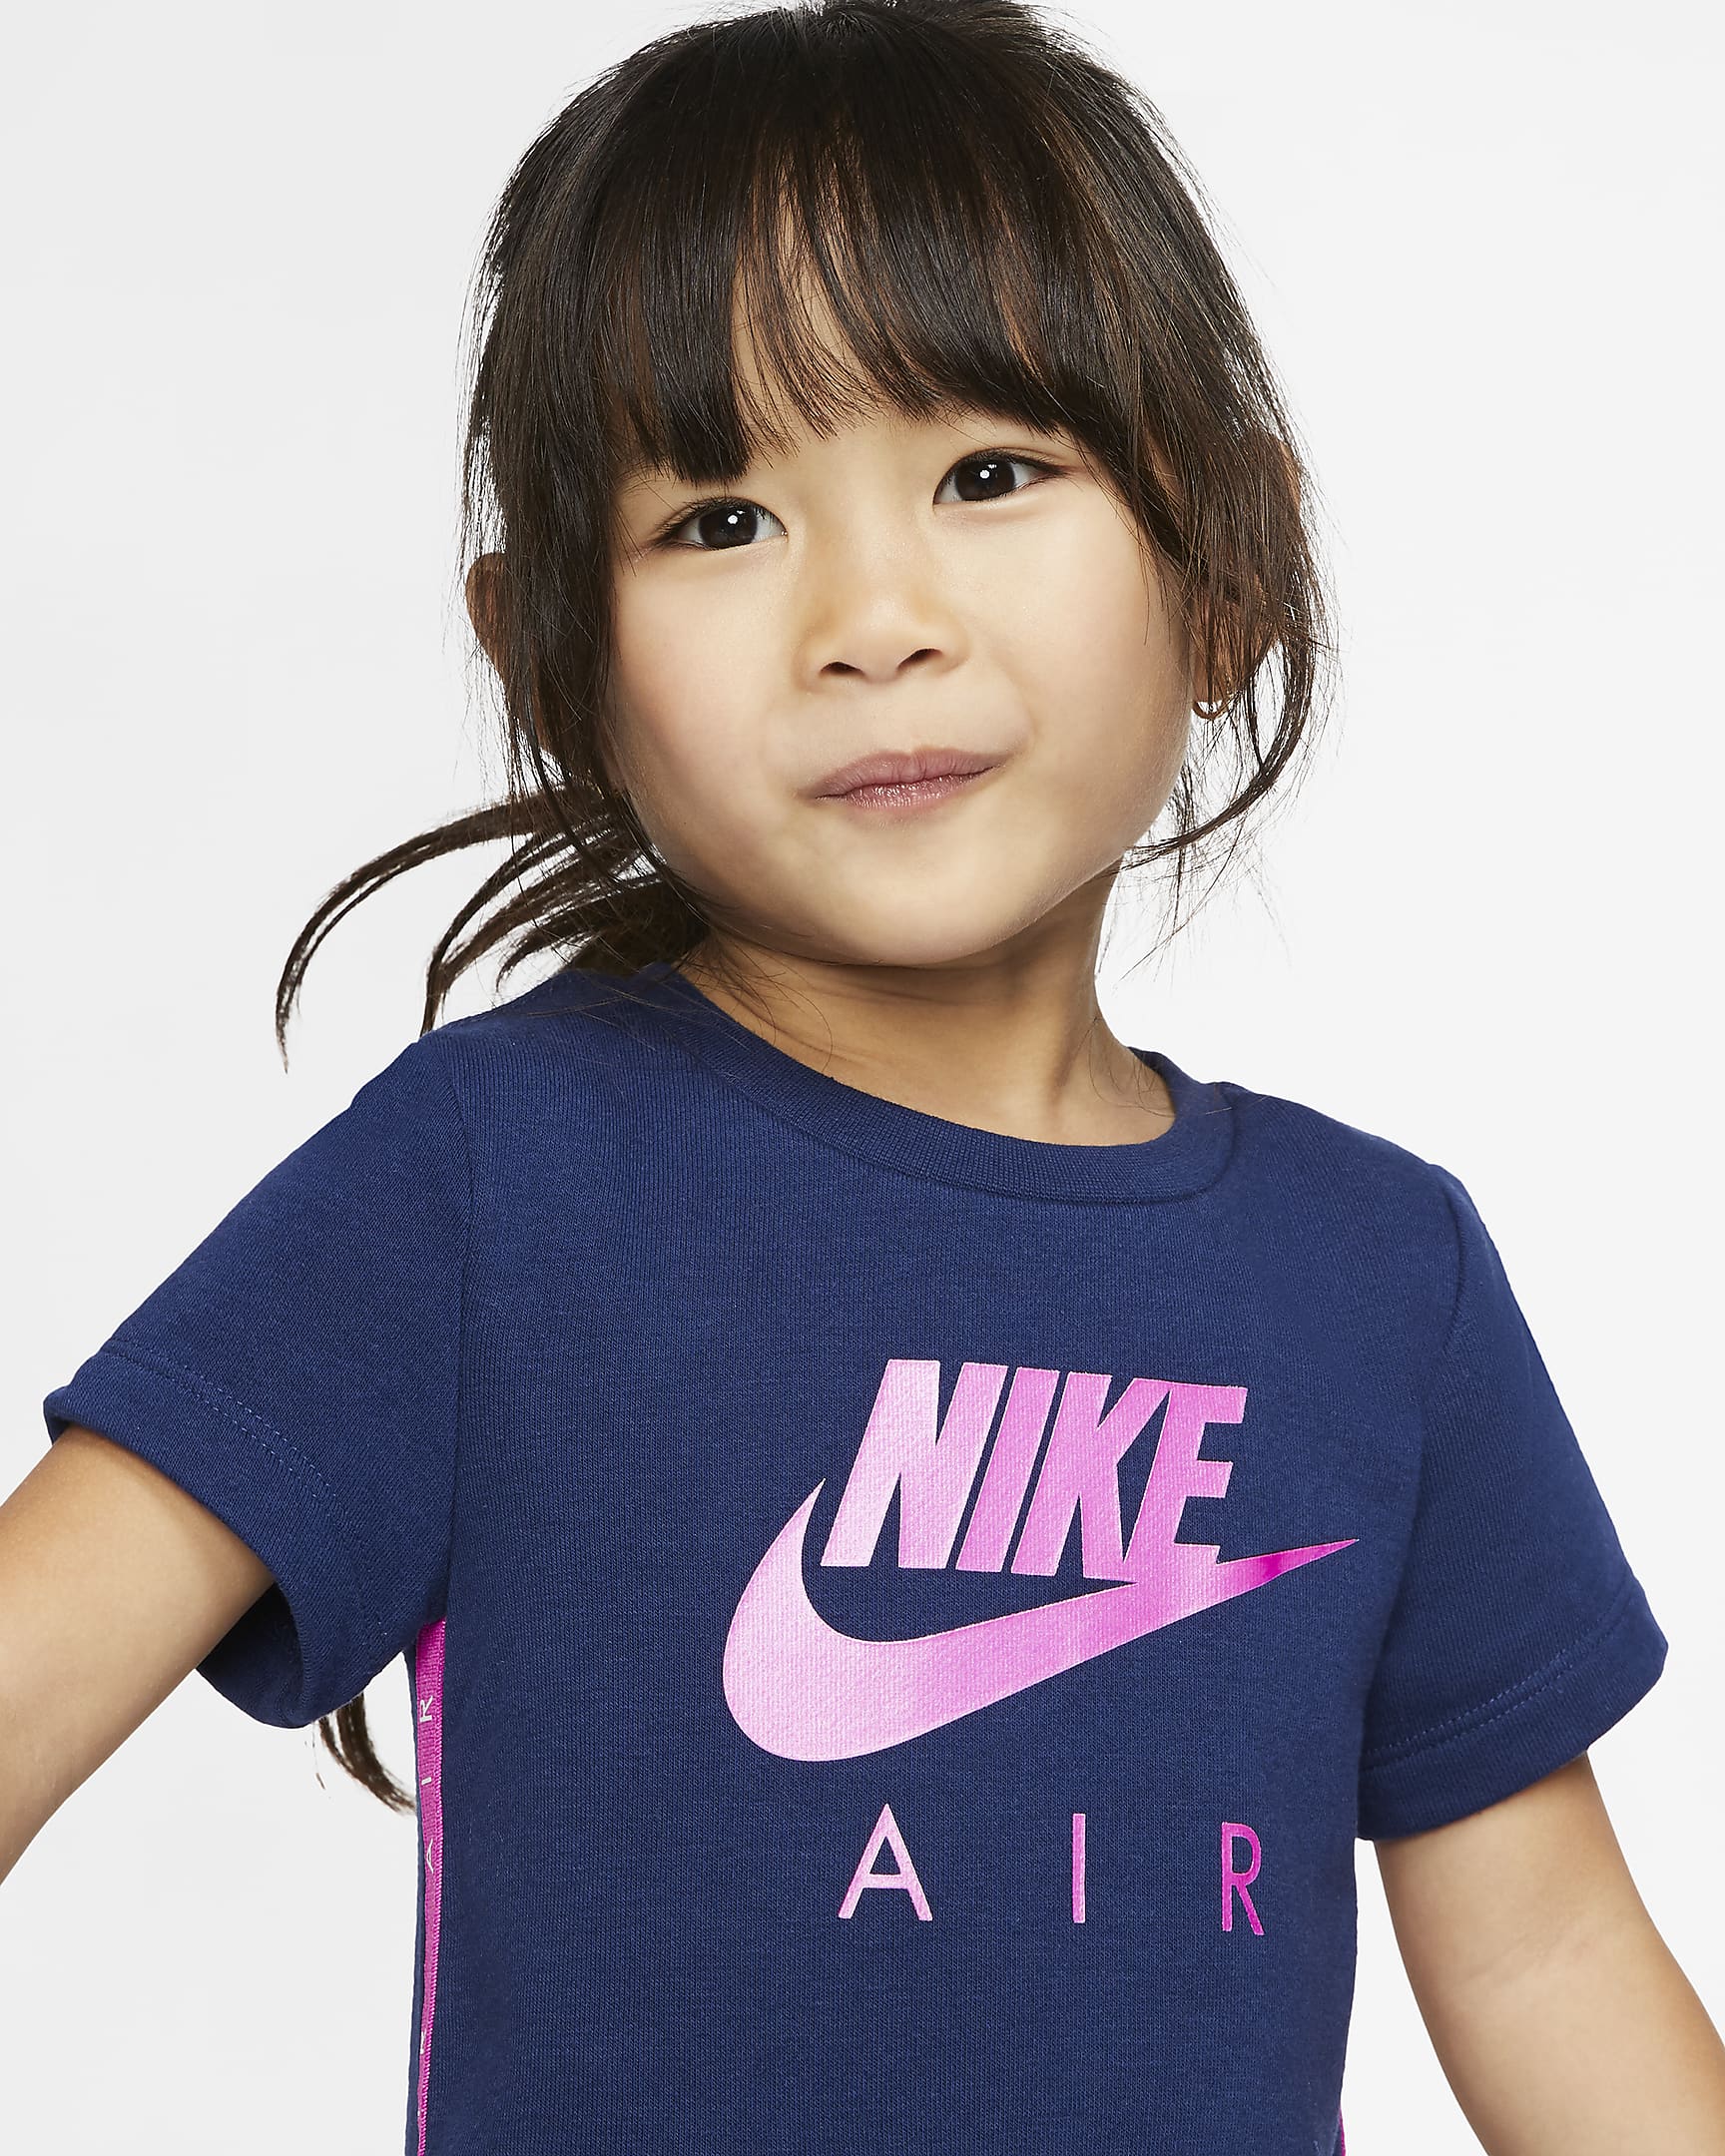 Nike Air Toddler Dress. Nike.com